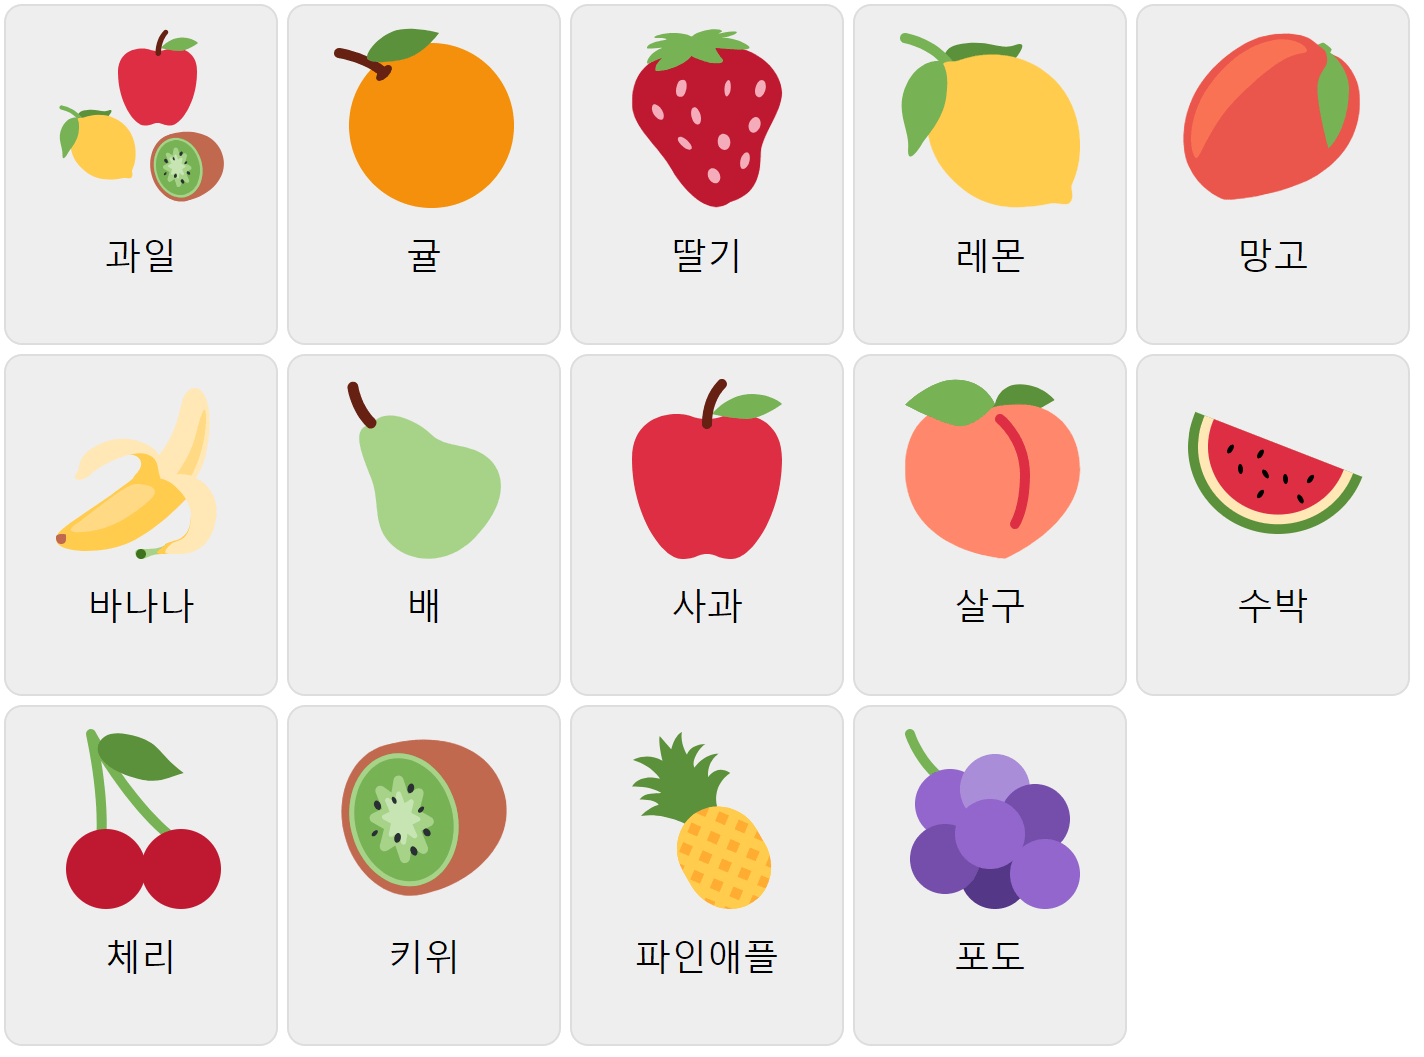 Fruits in Korean